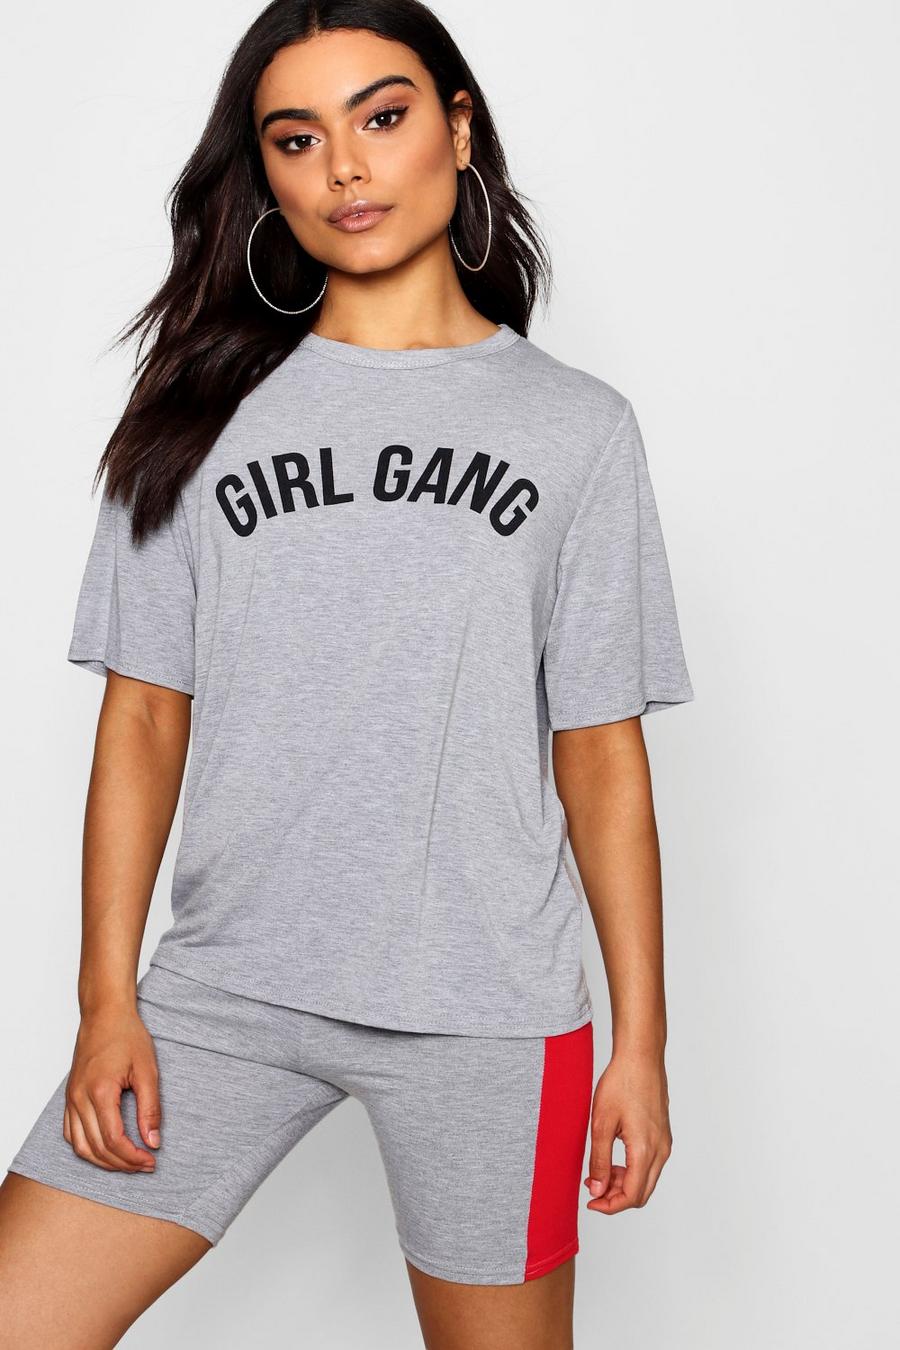 Camiseta extra grande Girl Gang, Grey marl image number 1